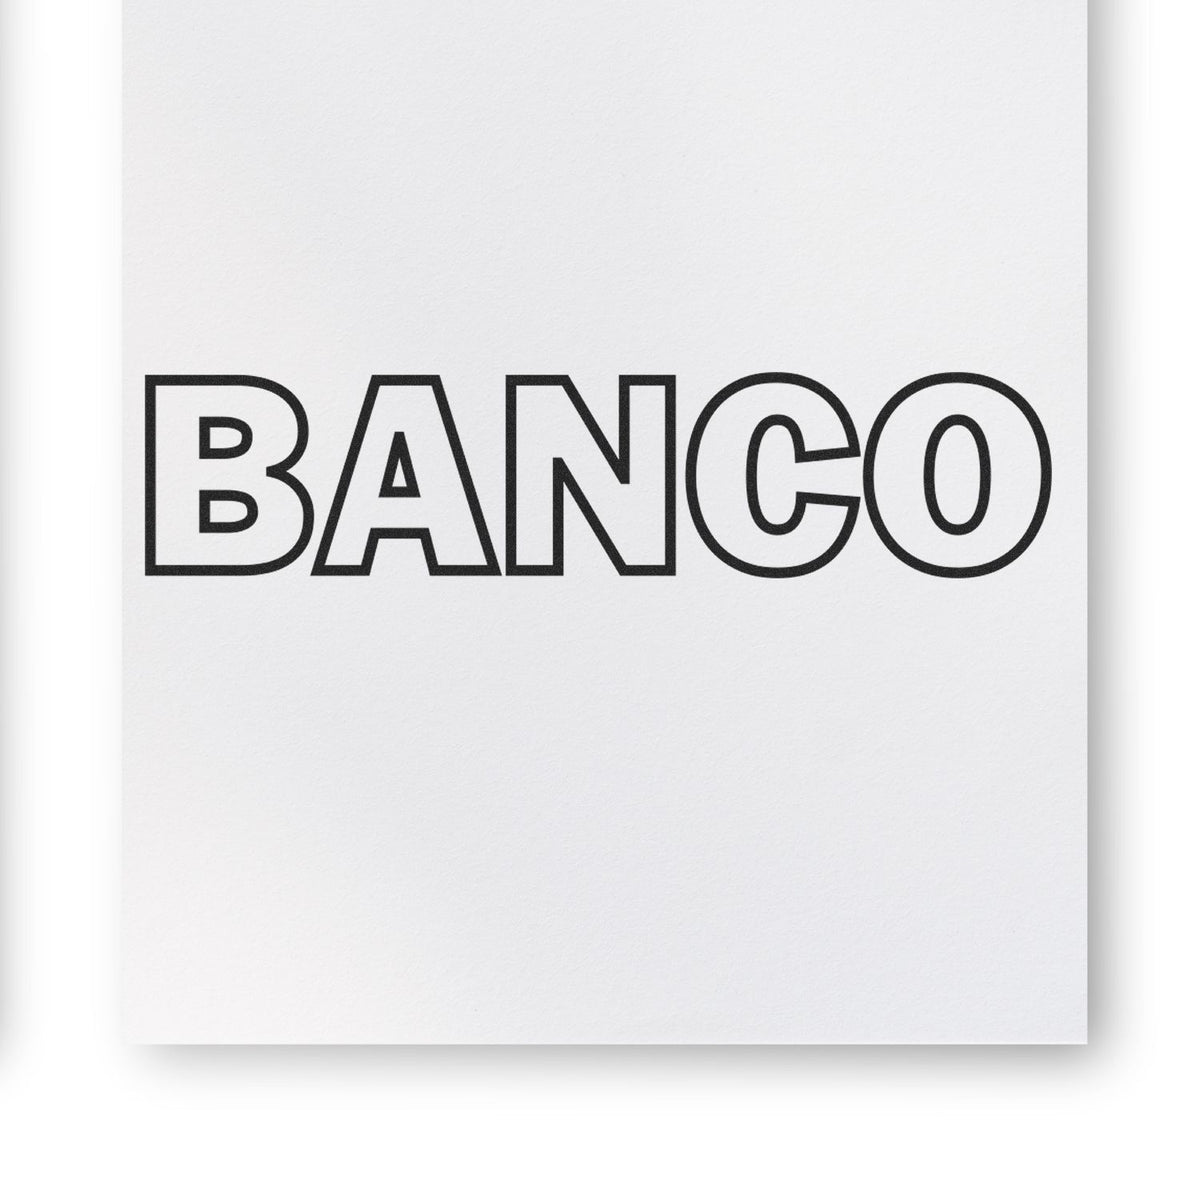 Self-Inking Banco Stamp Lifestyle Photo